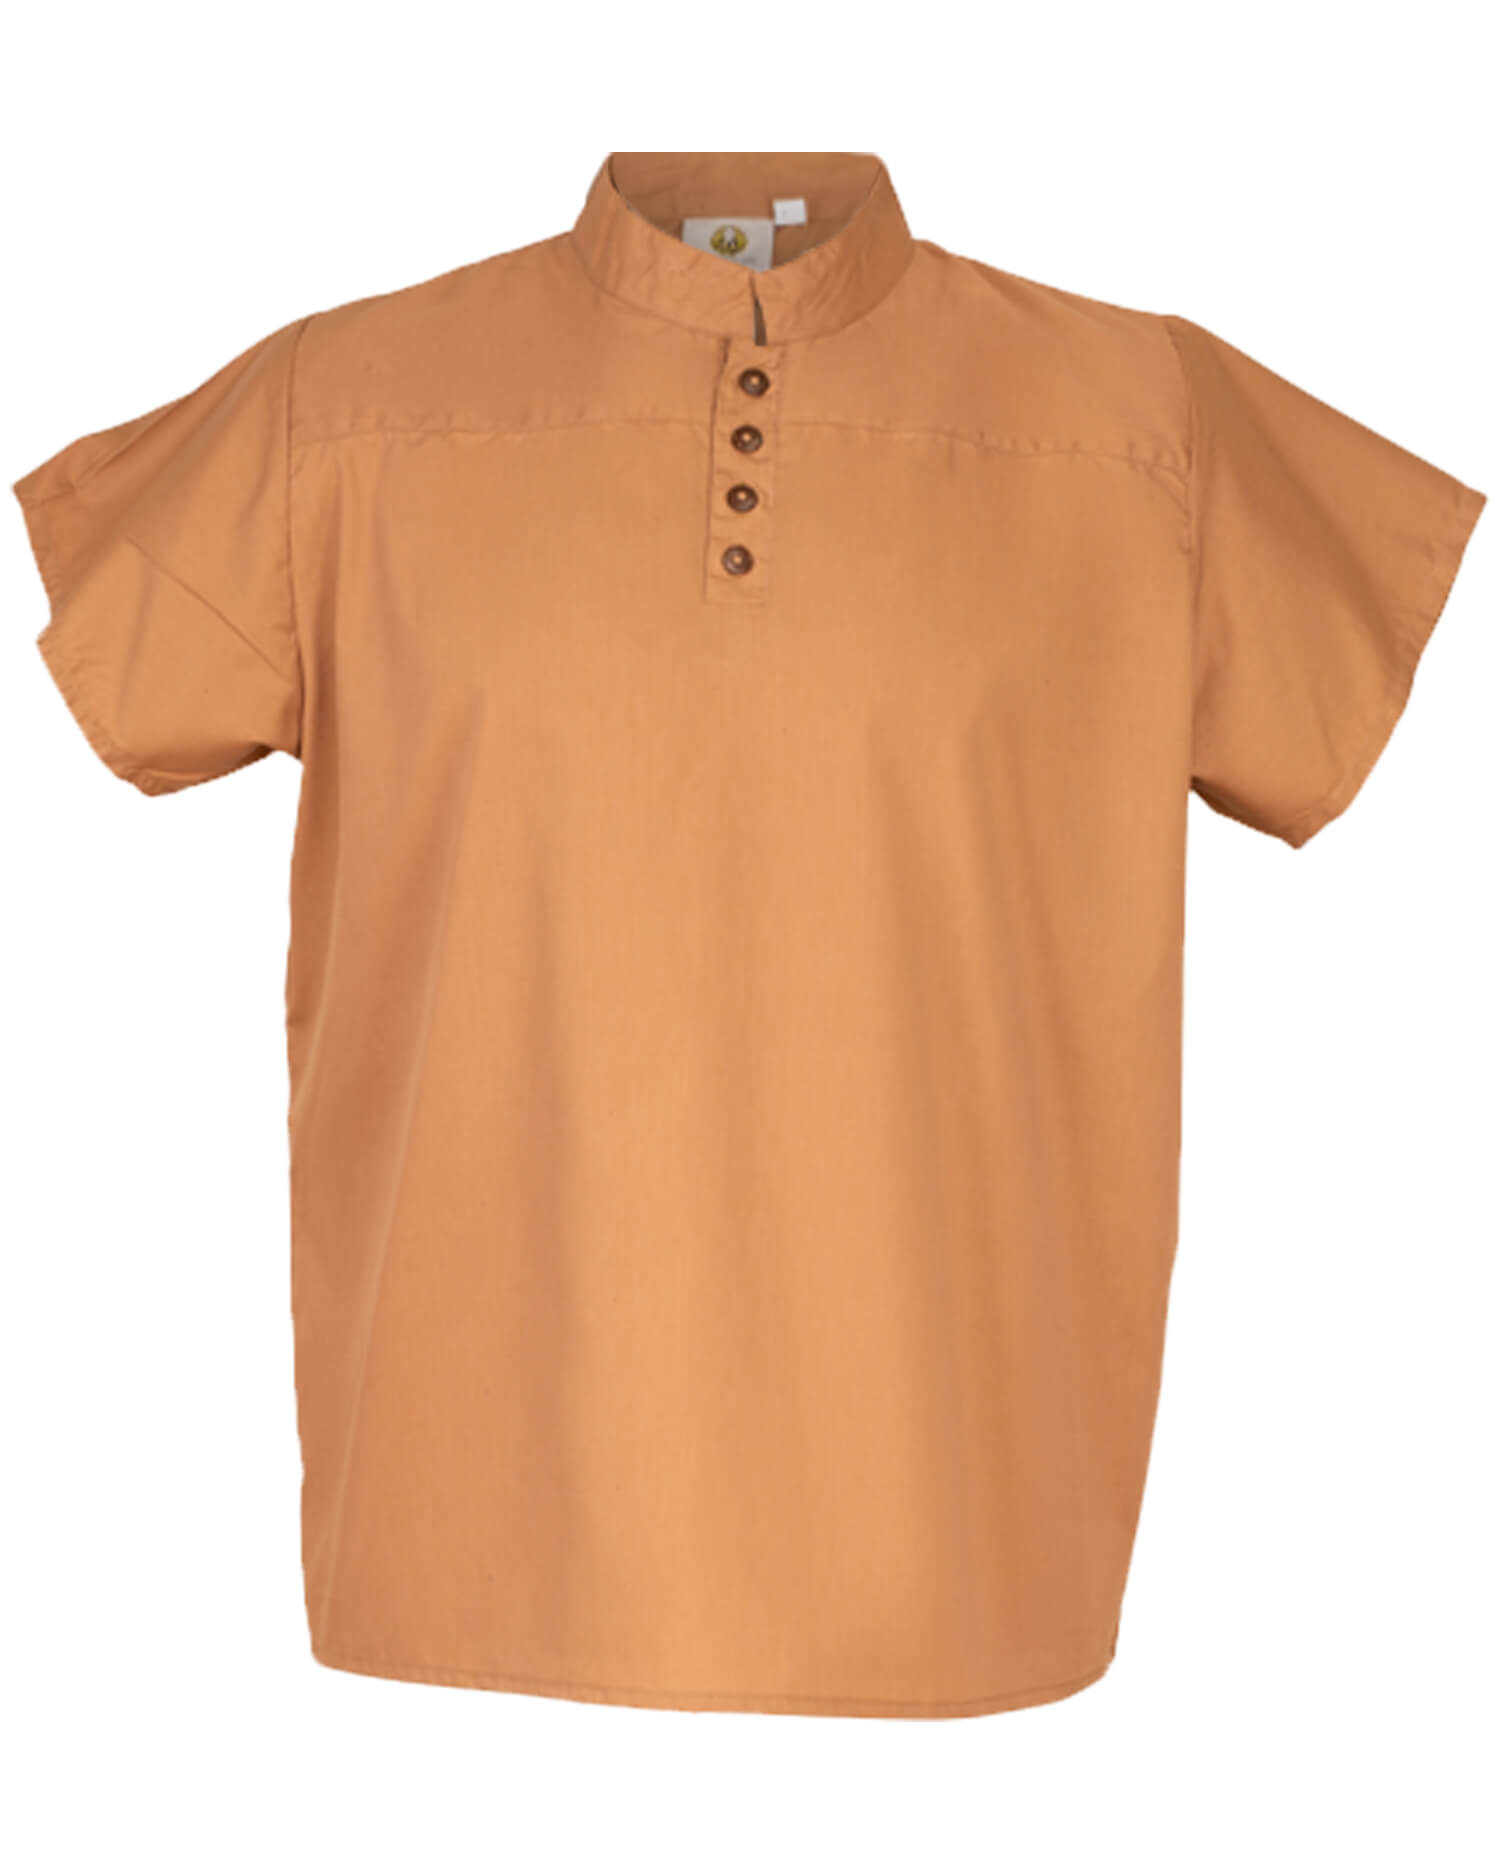 Bartold shirt short sleeve light cotton sand